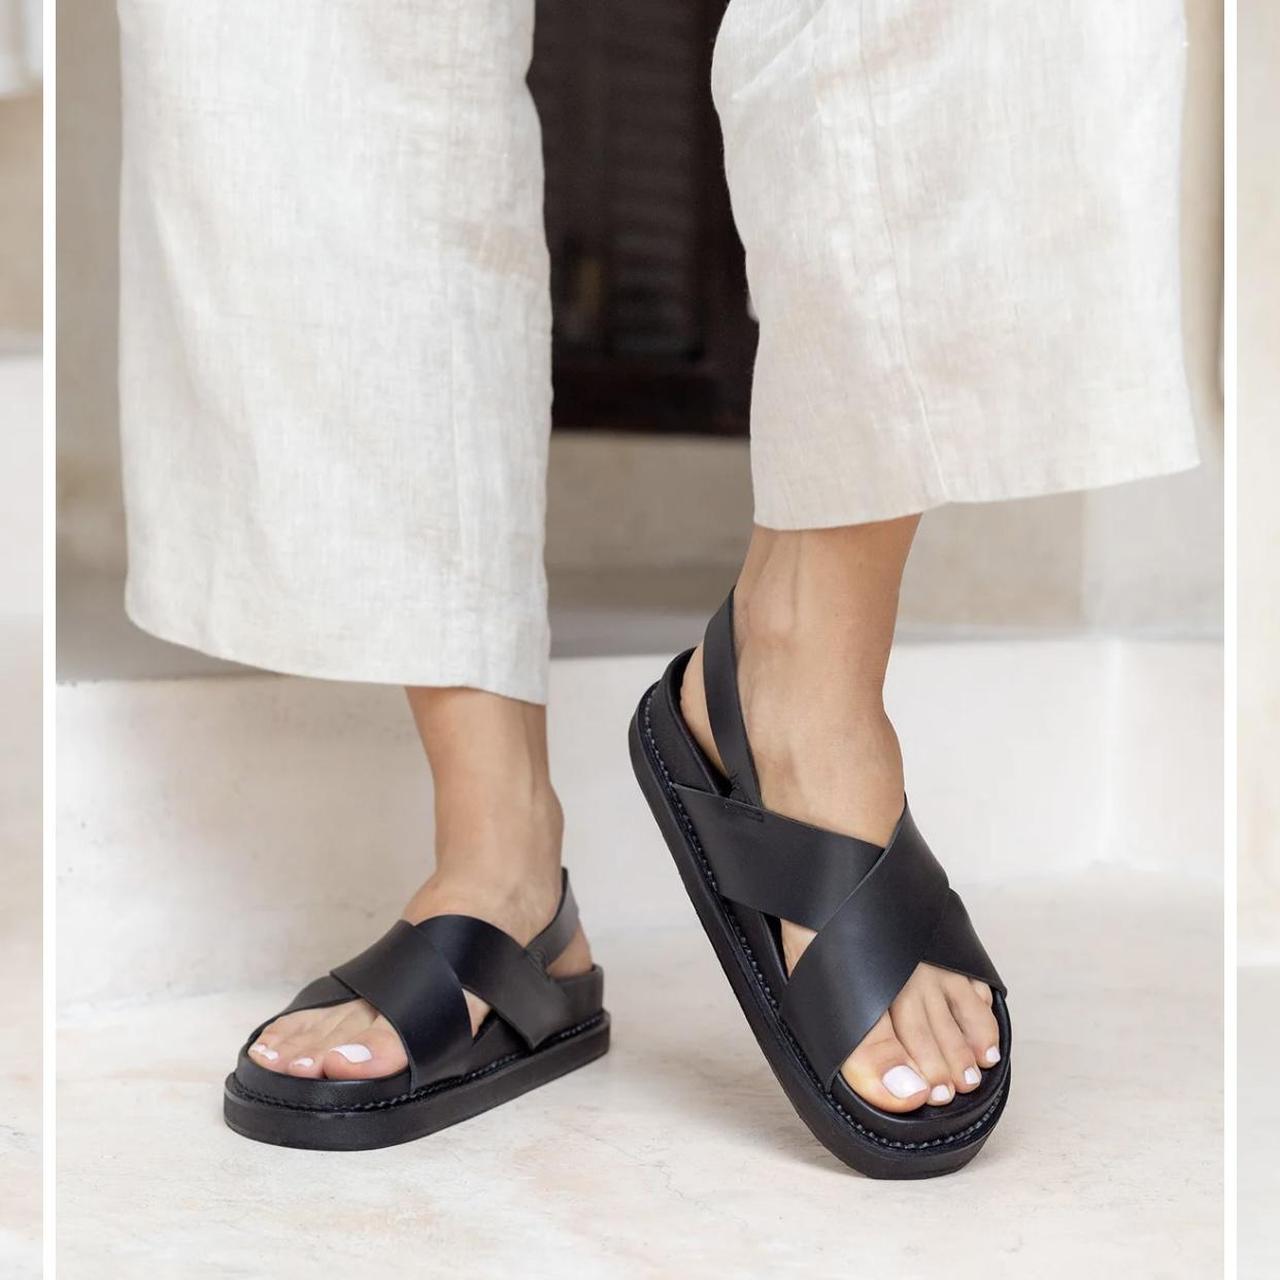 Liberte Leather Capri Sandals Size women’s... - Depop